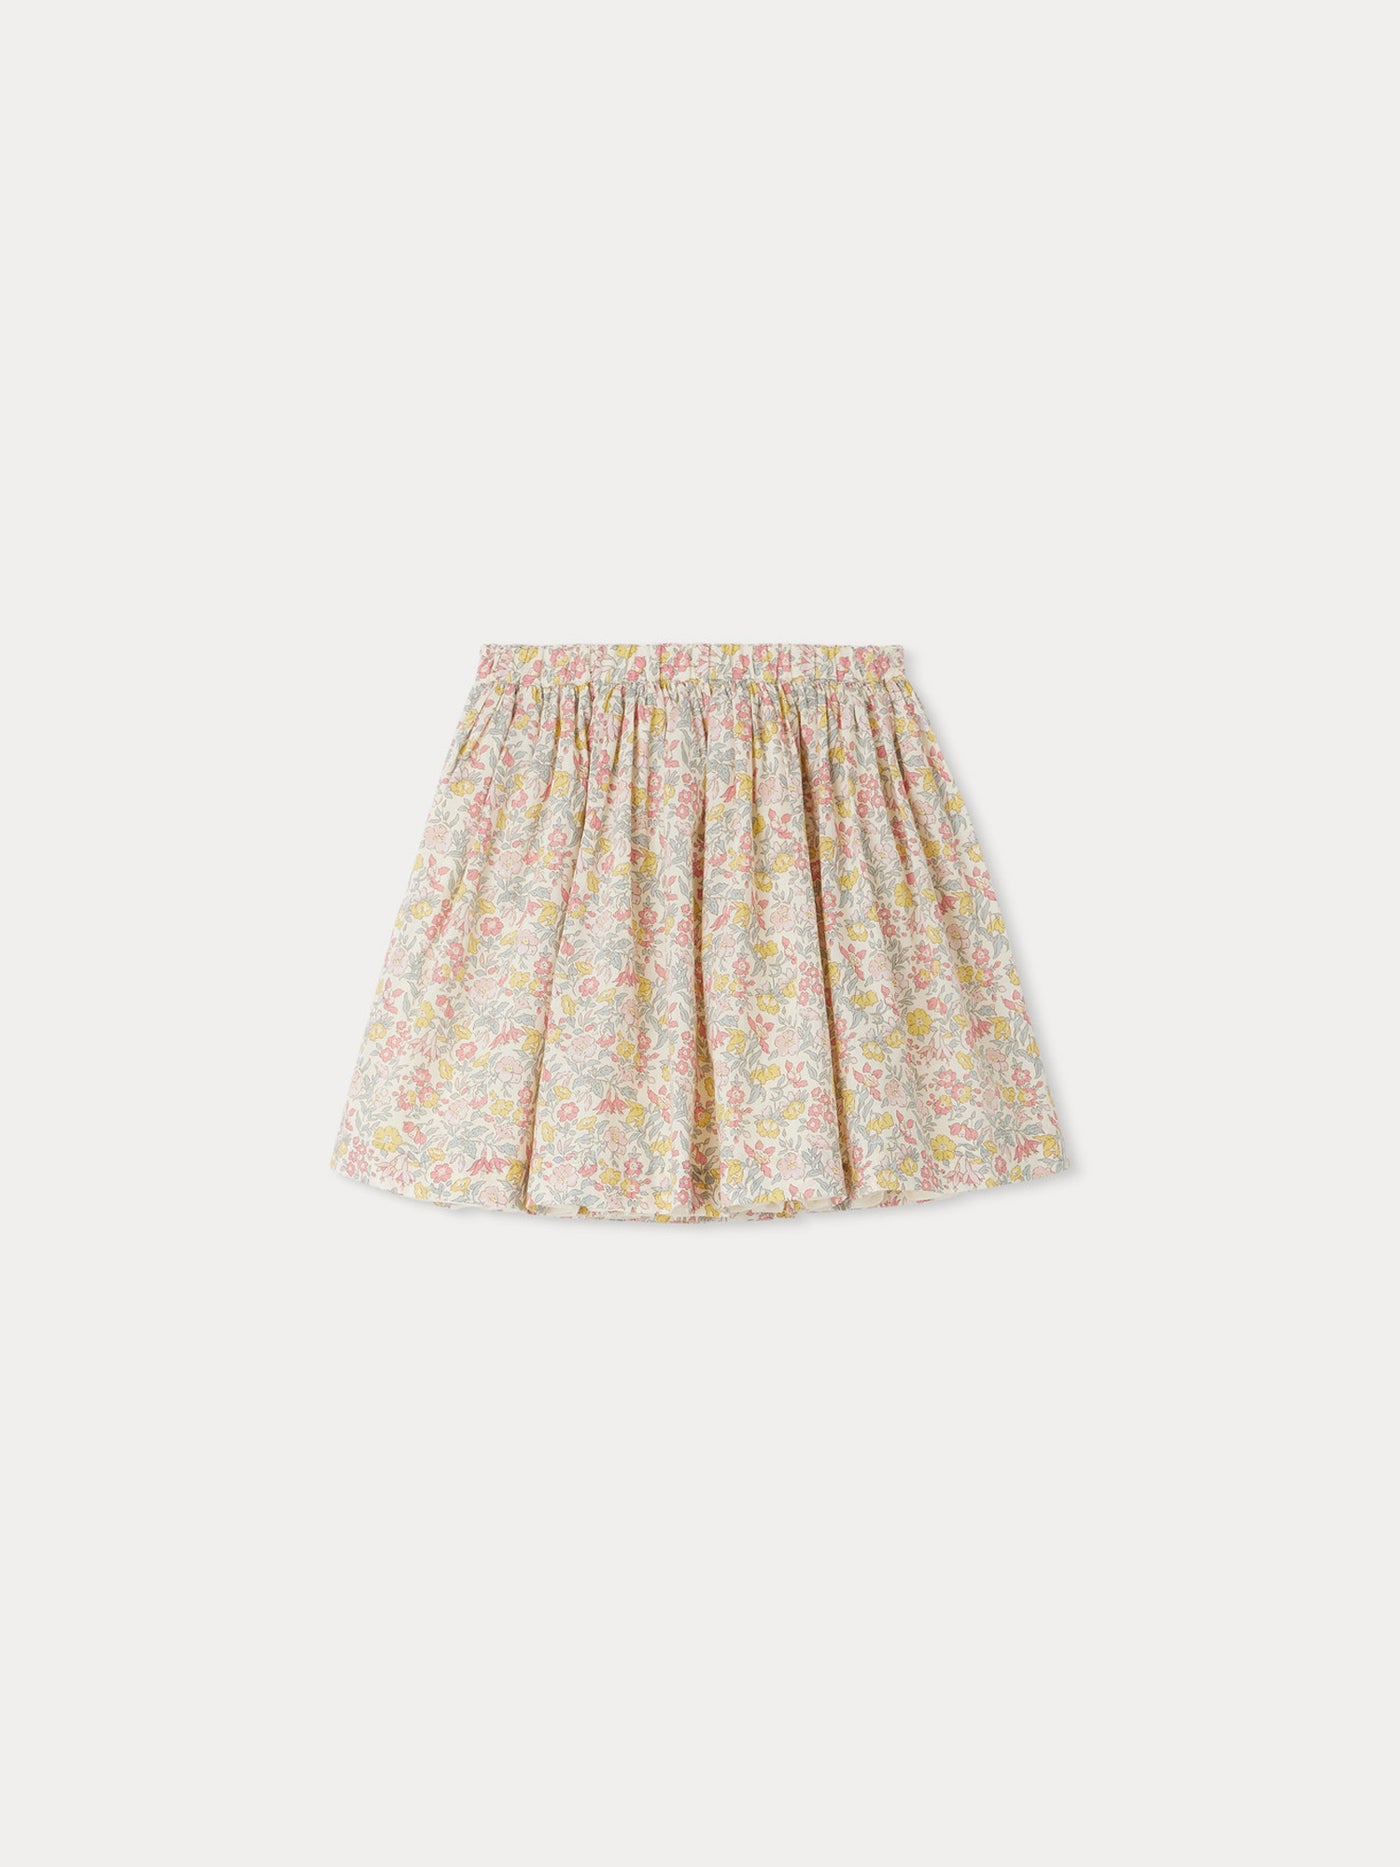 Suzon skirt in organic Liberty fabric